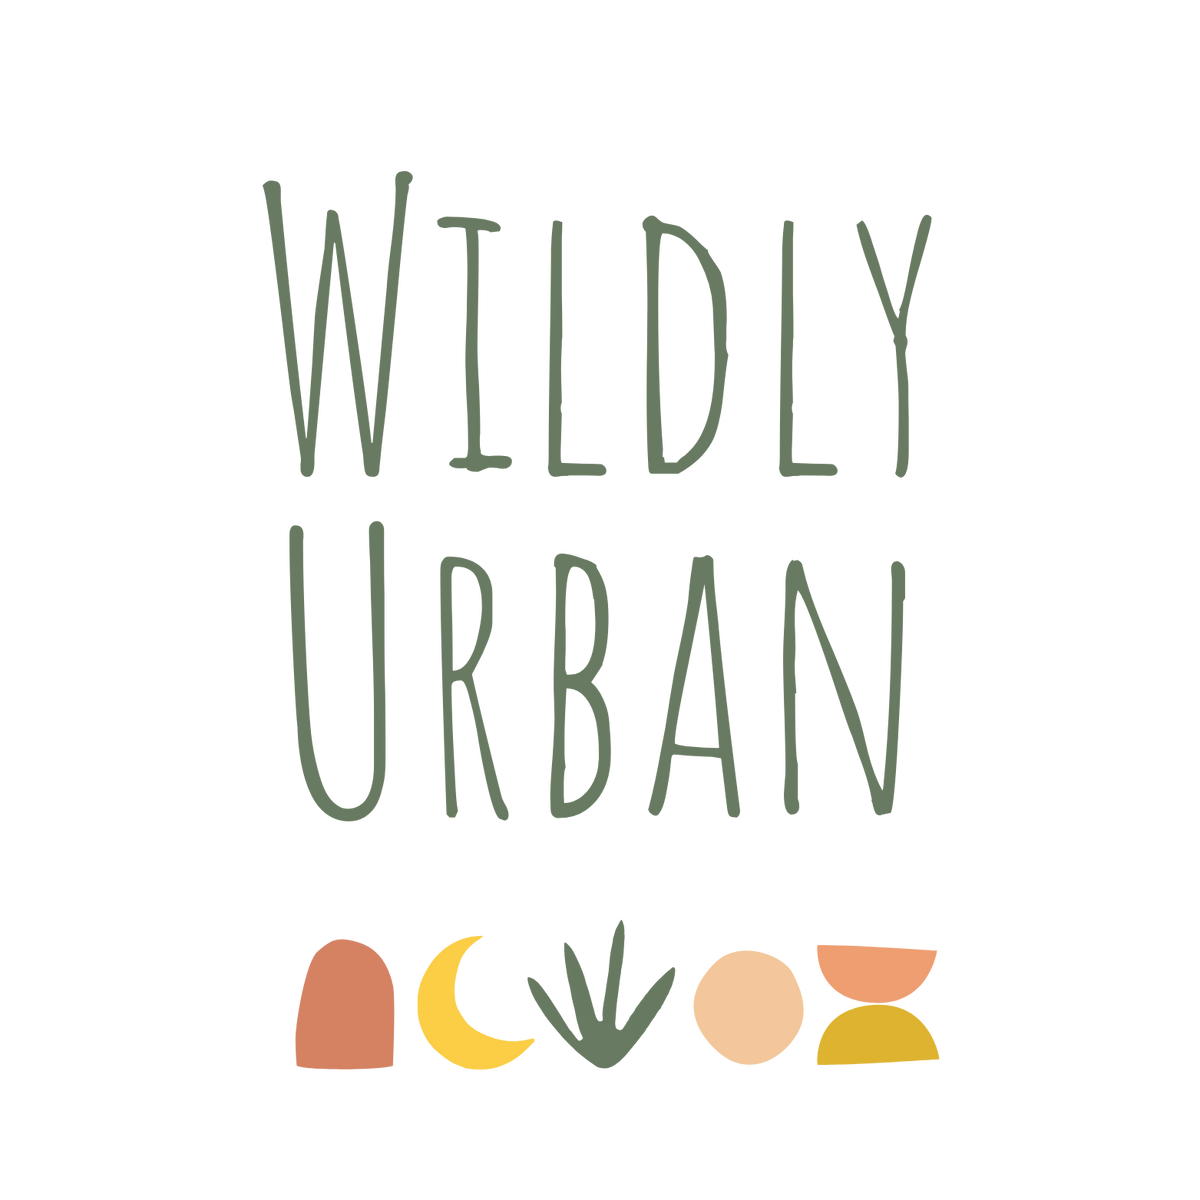 Wildly Urban 